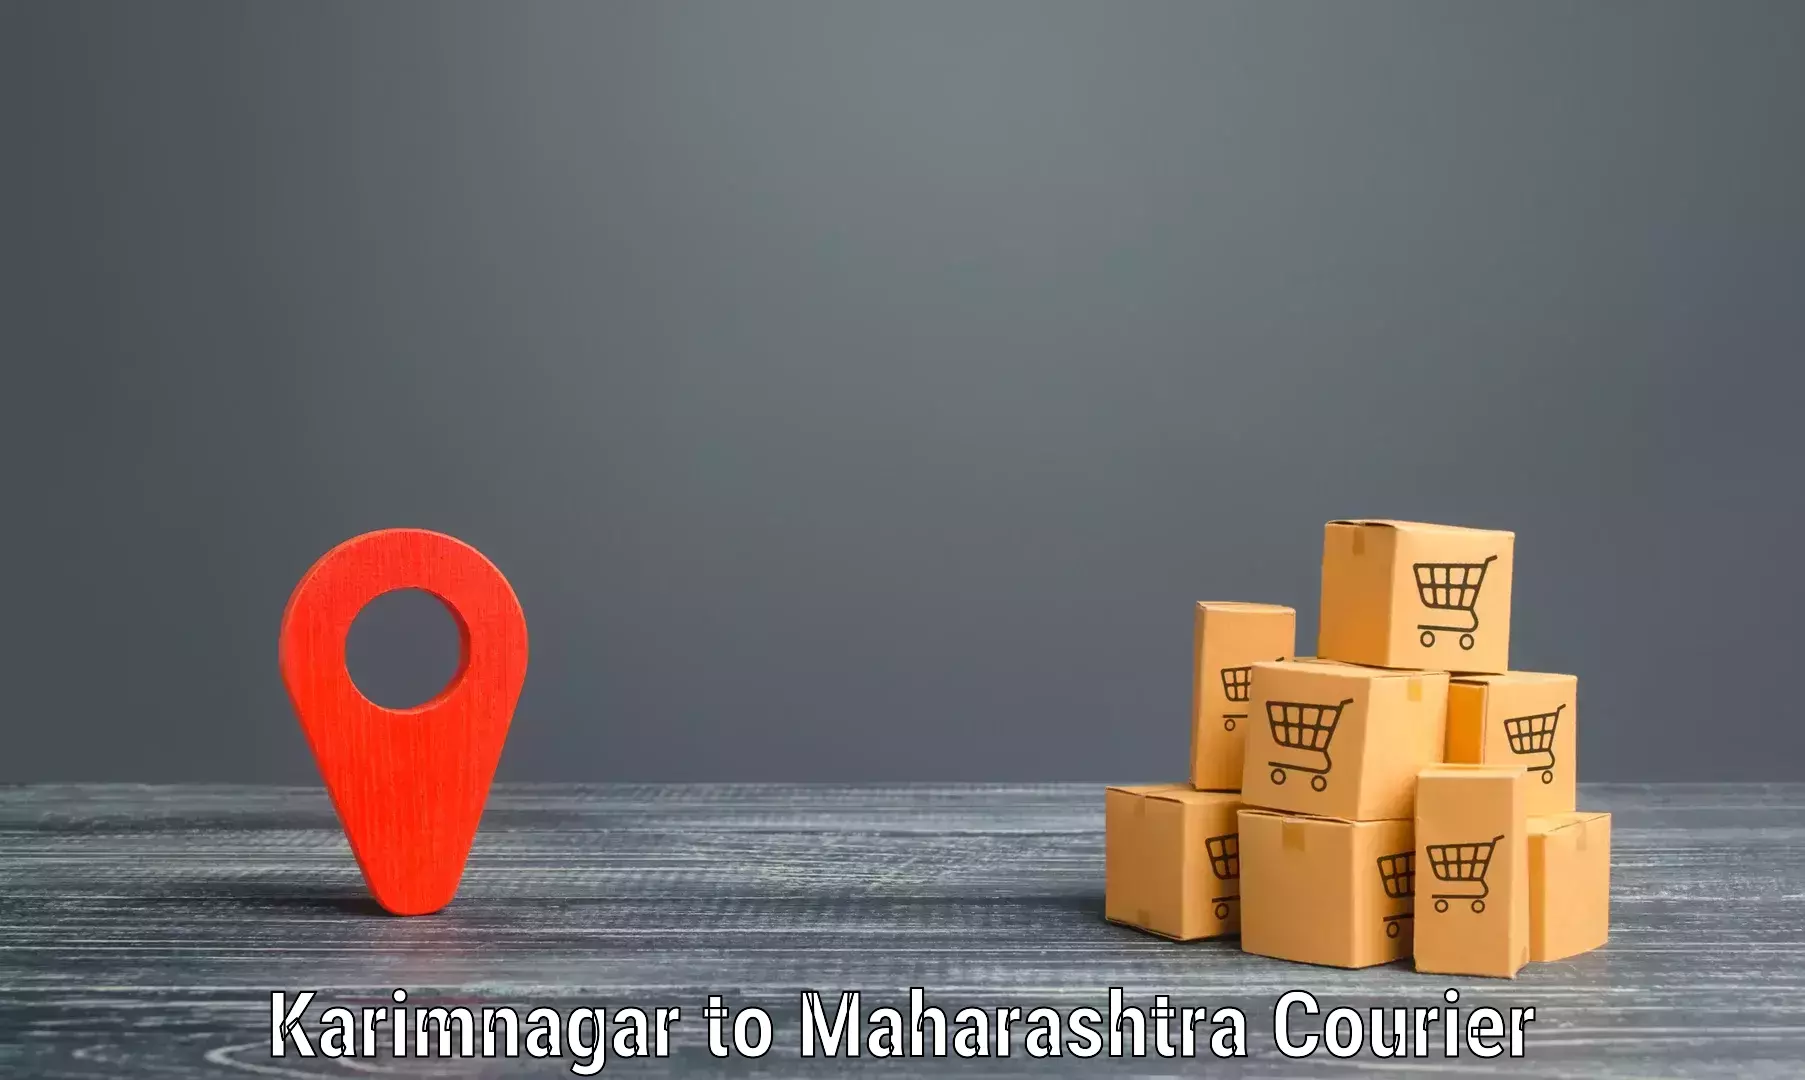 Courier service booking Karimnagar to Nashik